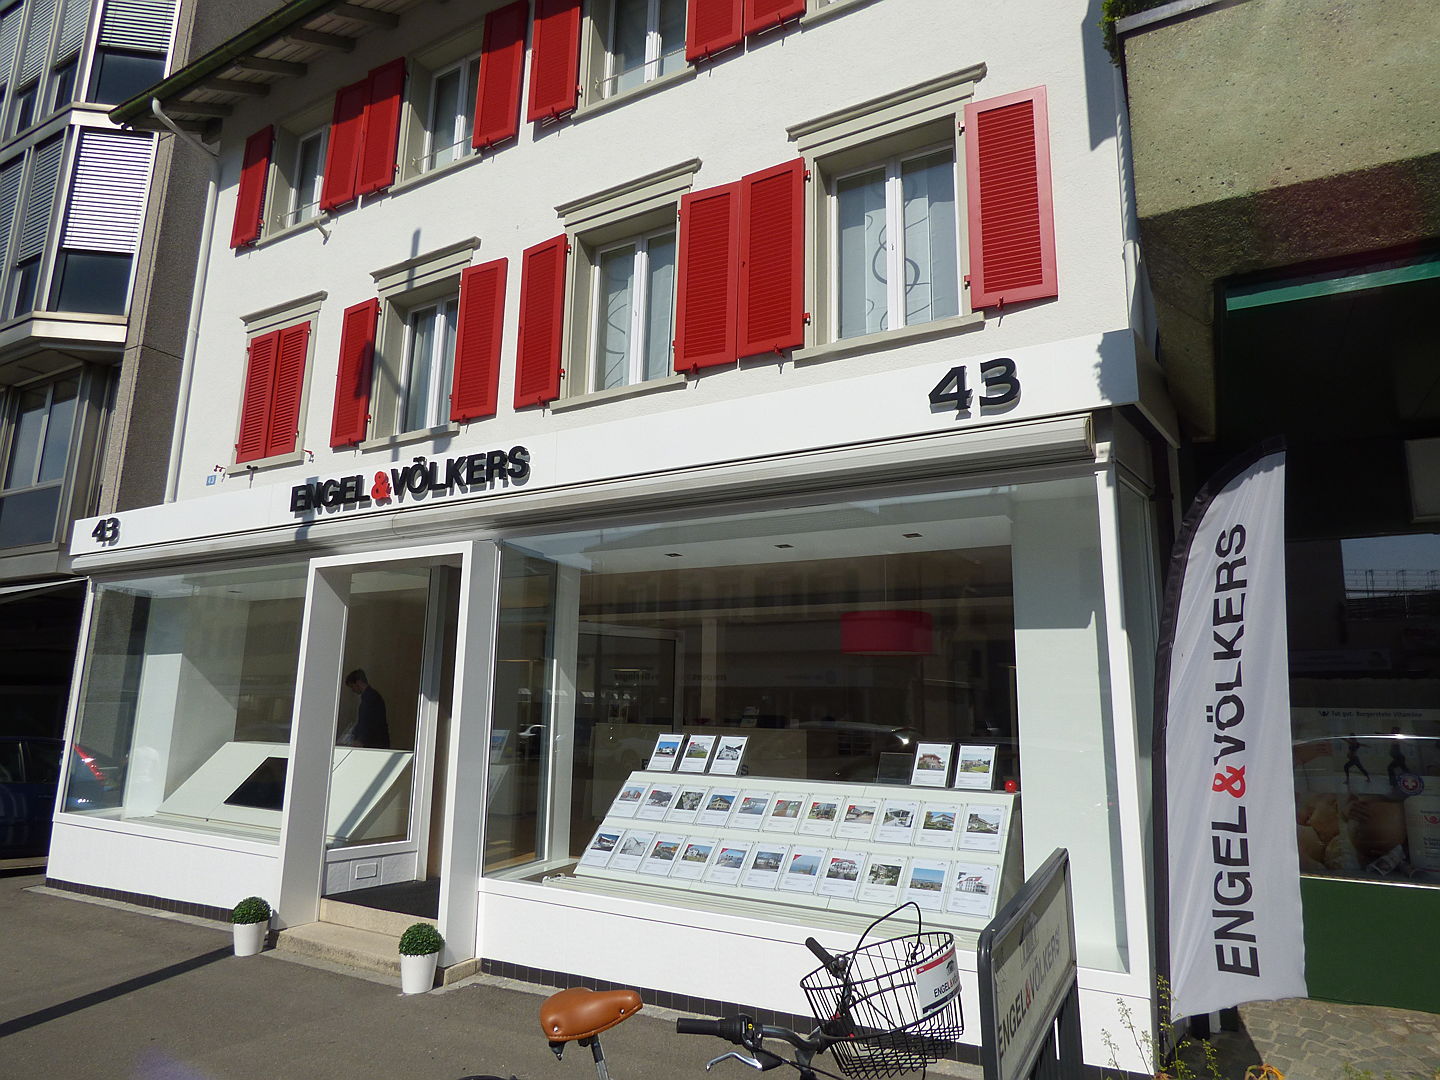  Kreuzlingen
- Unser neuer Shop in der Hauptstrasse 43 in Kreuzlingen